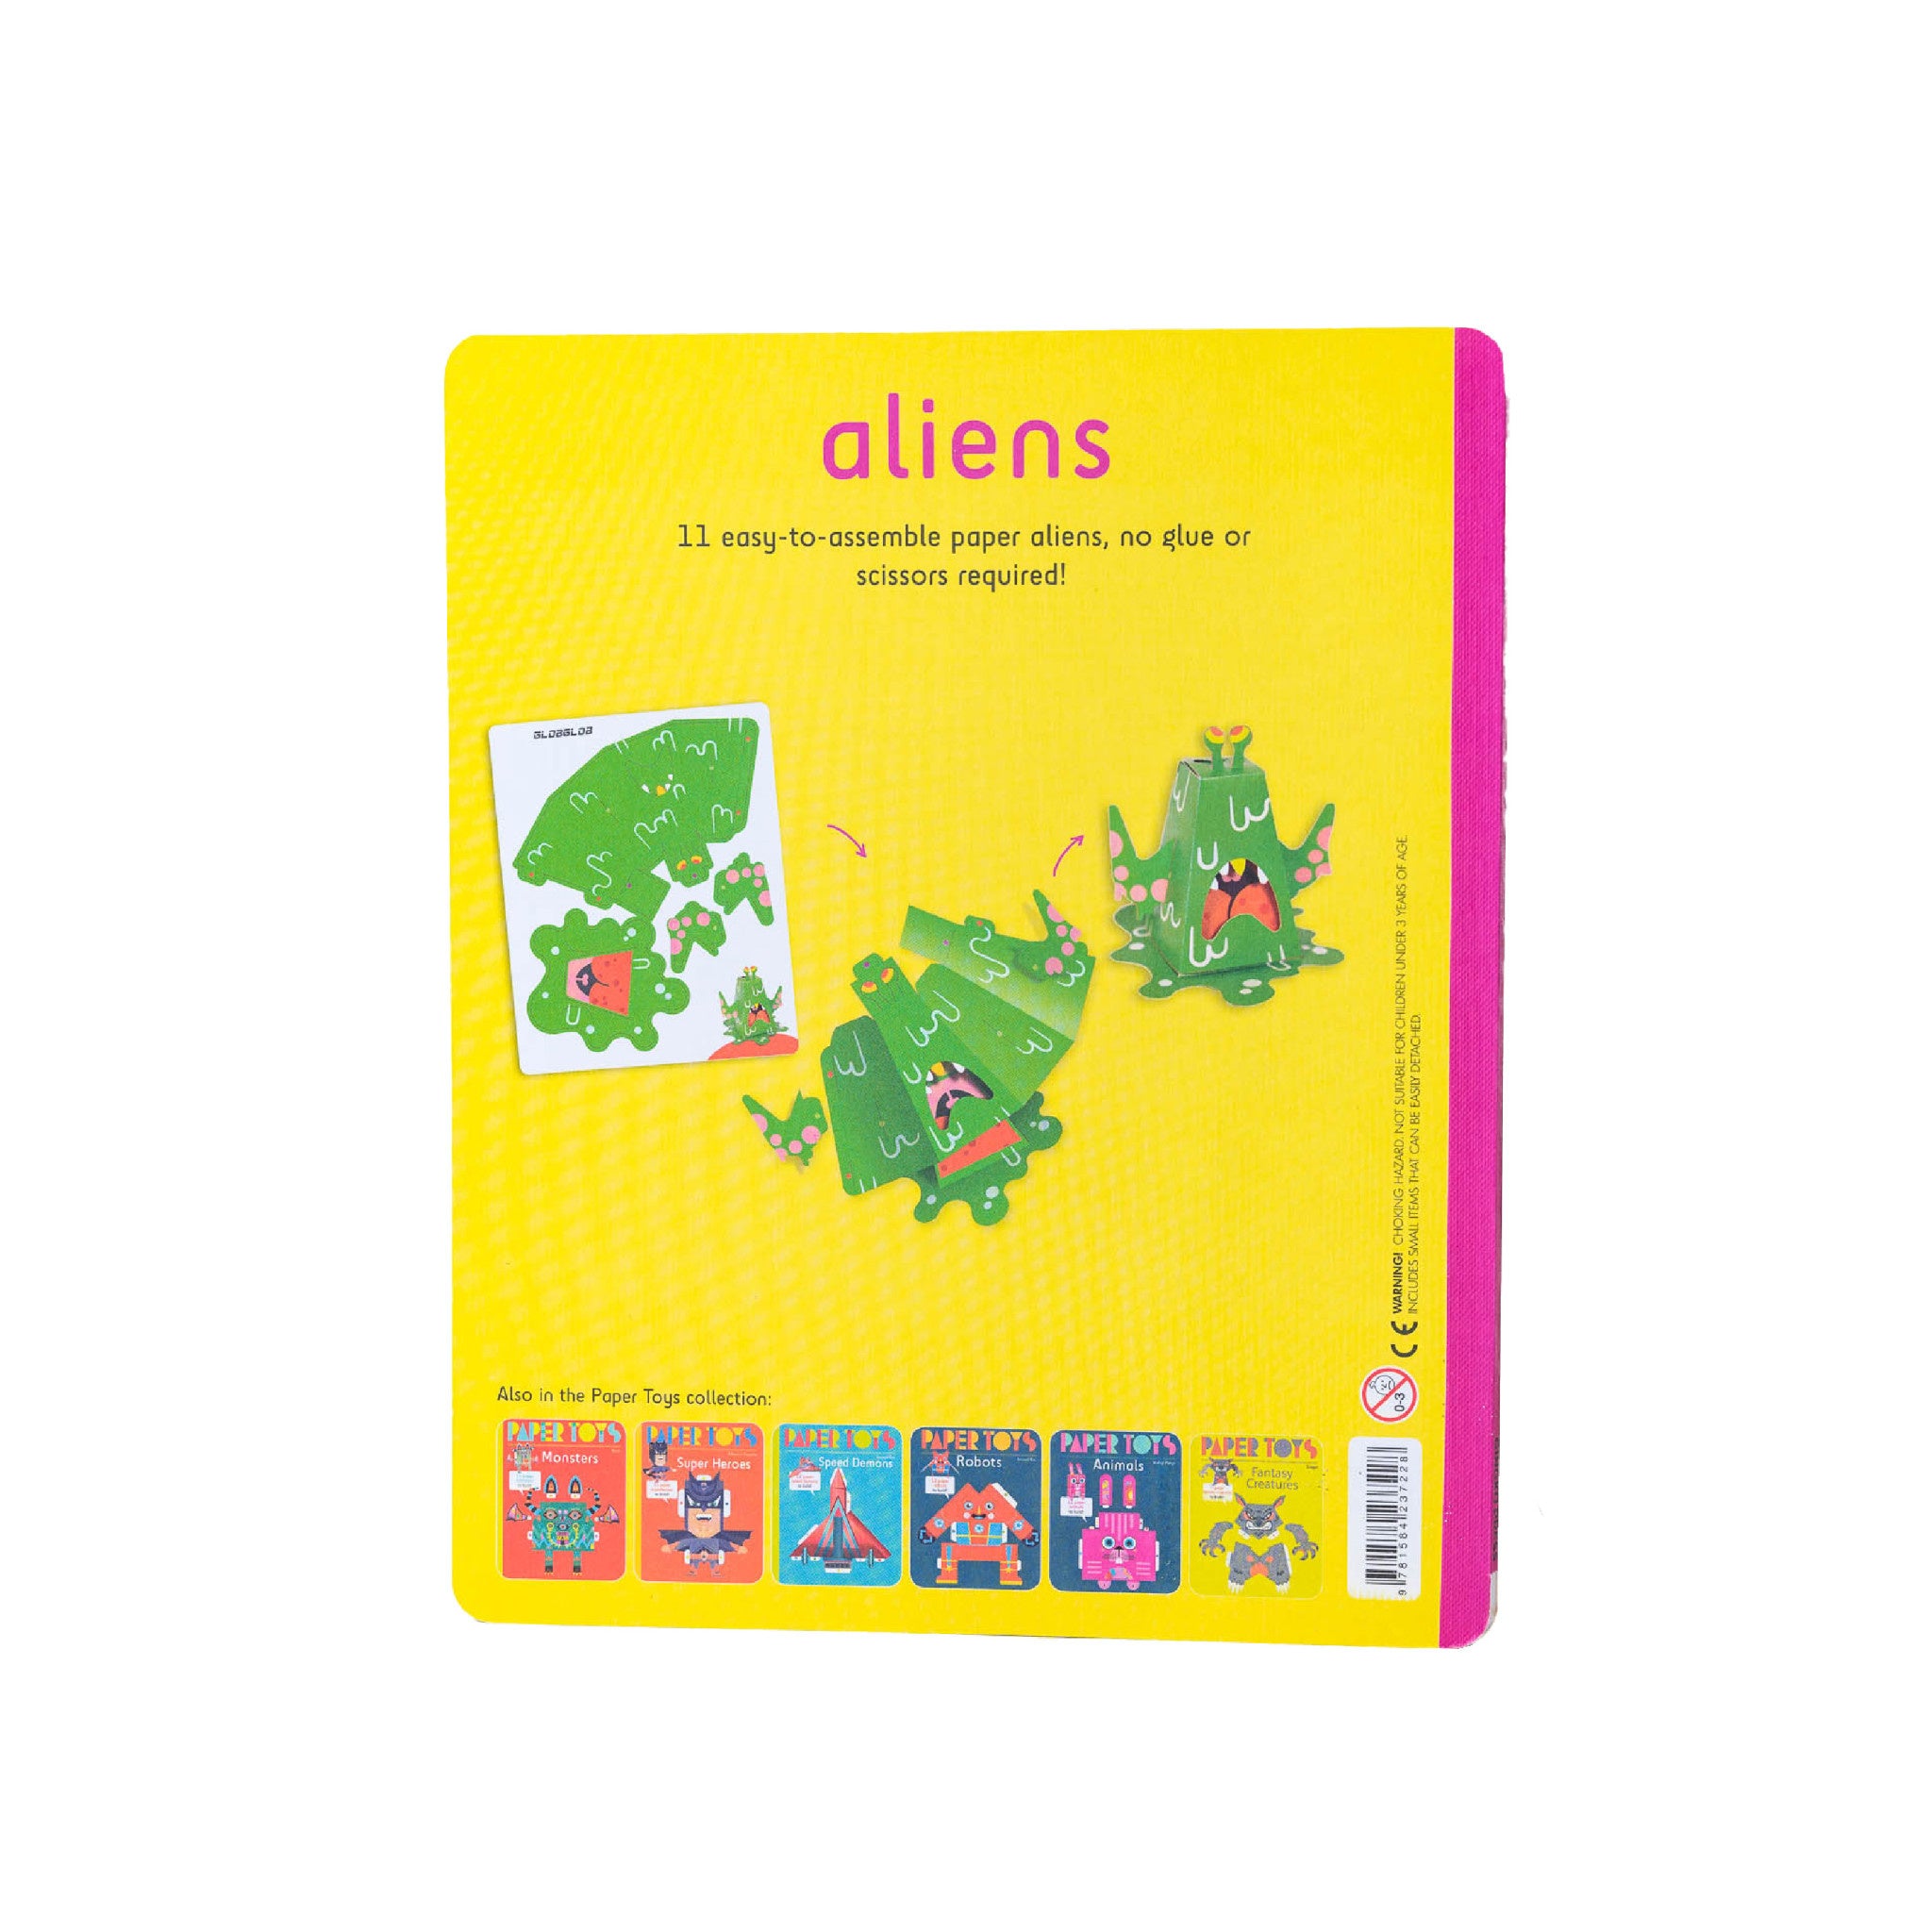 Aliens: 11 Paper Aliens to Build (Paper Toys) - Wynwood Walls Shop